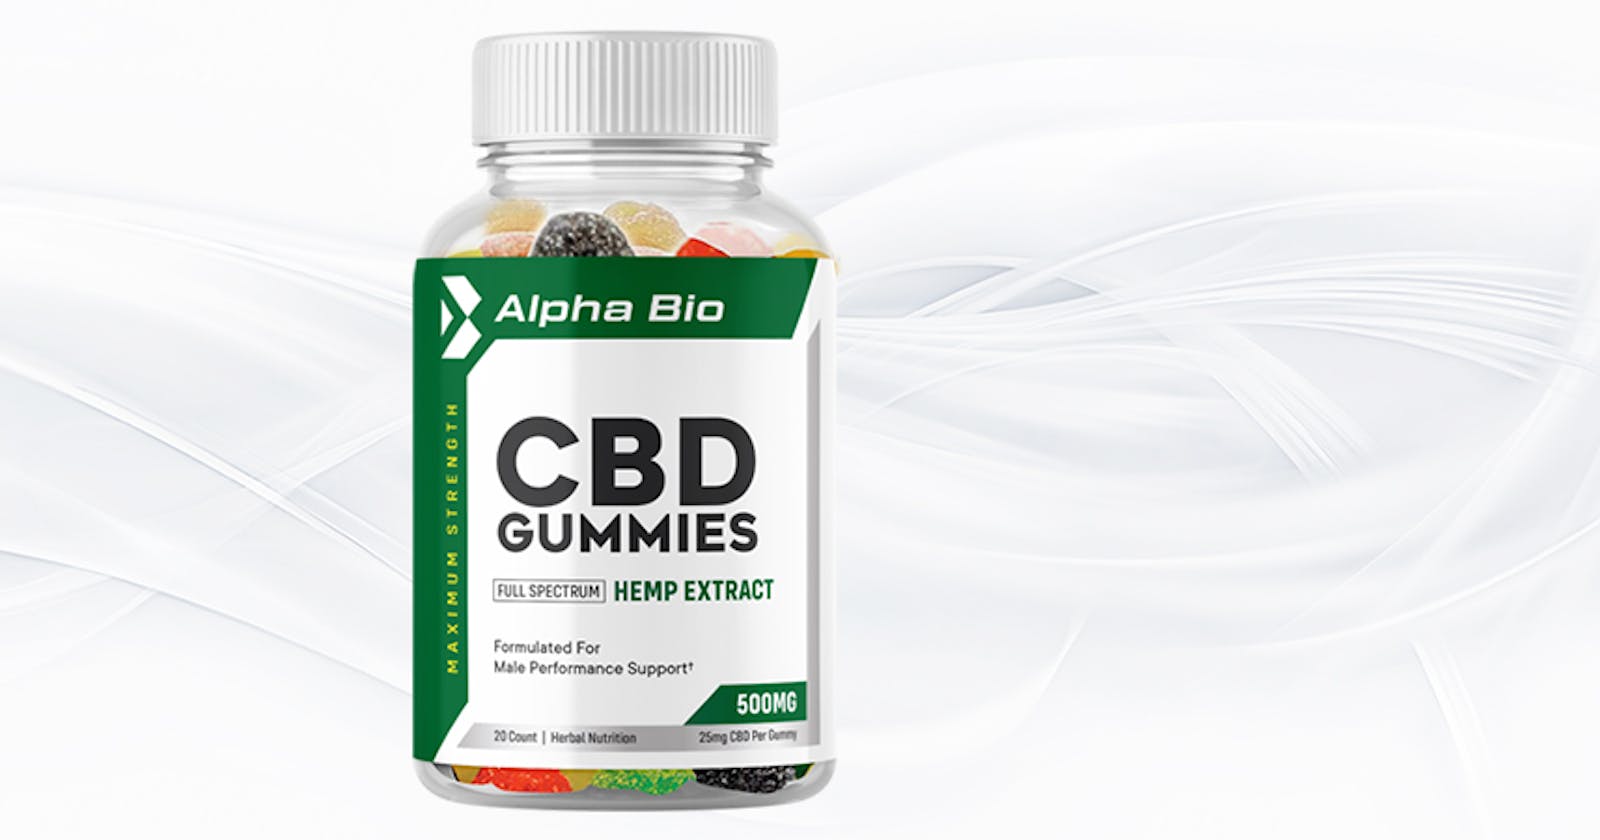 Alpha Bio CBD Gummies Best Reviews, Results, Where To Buy?